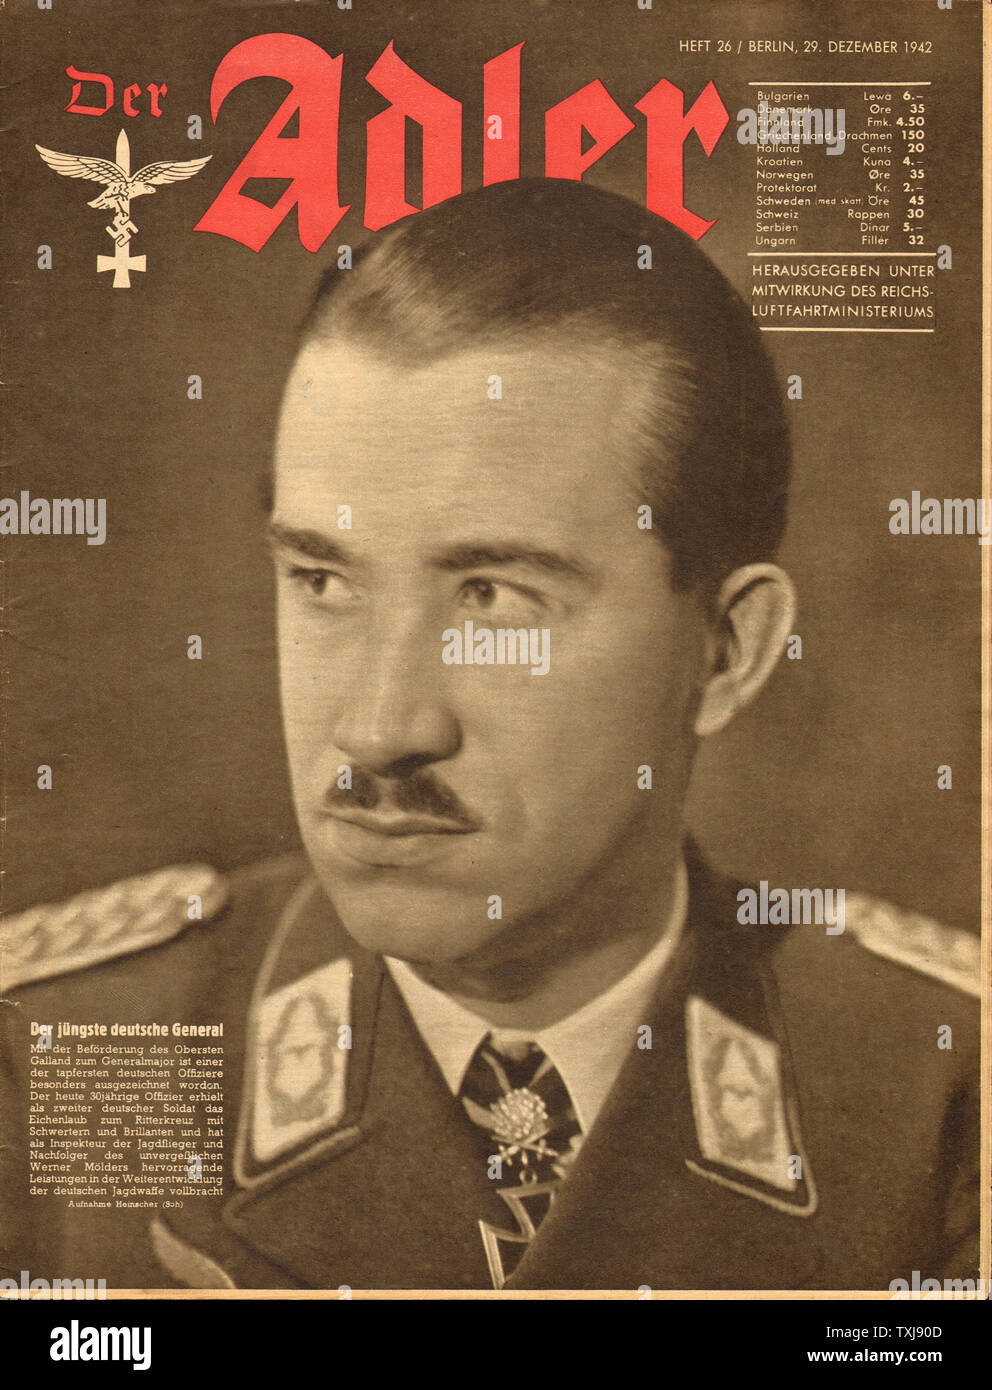 1942 Der Adler (Luftwaffe magazine) General-Major Adolf Galland Foto Stock